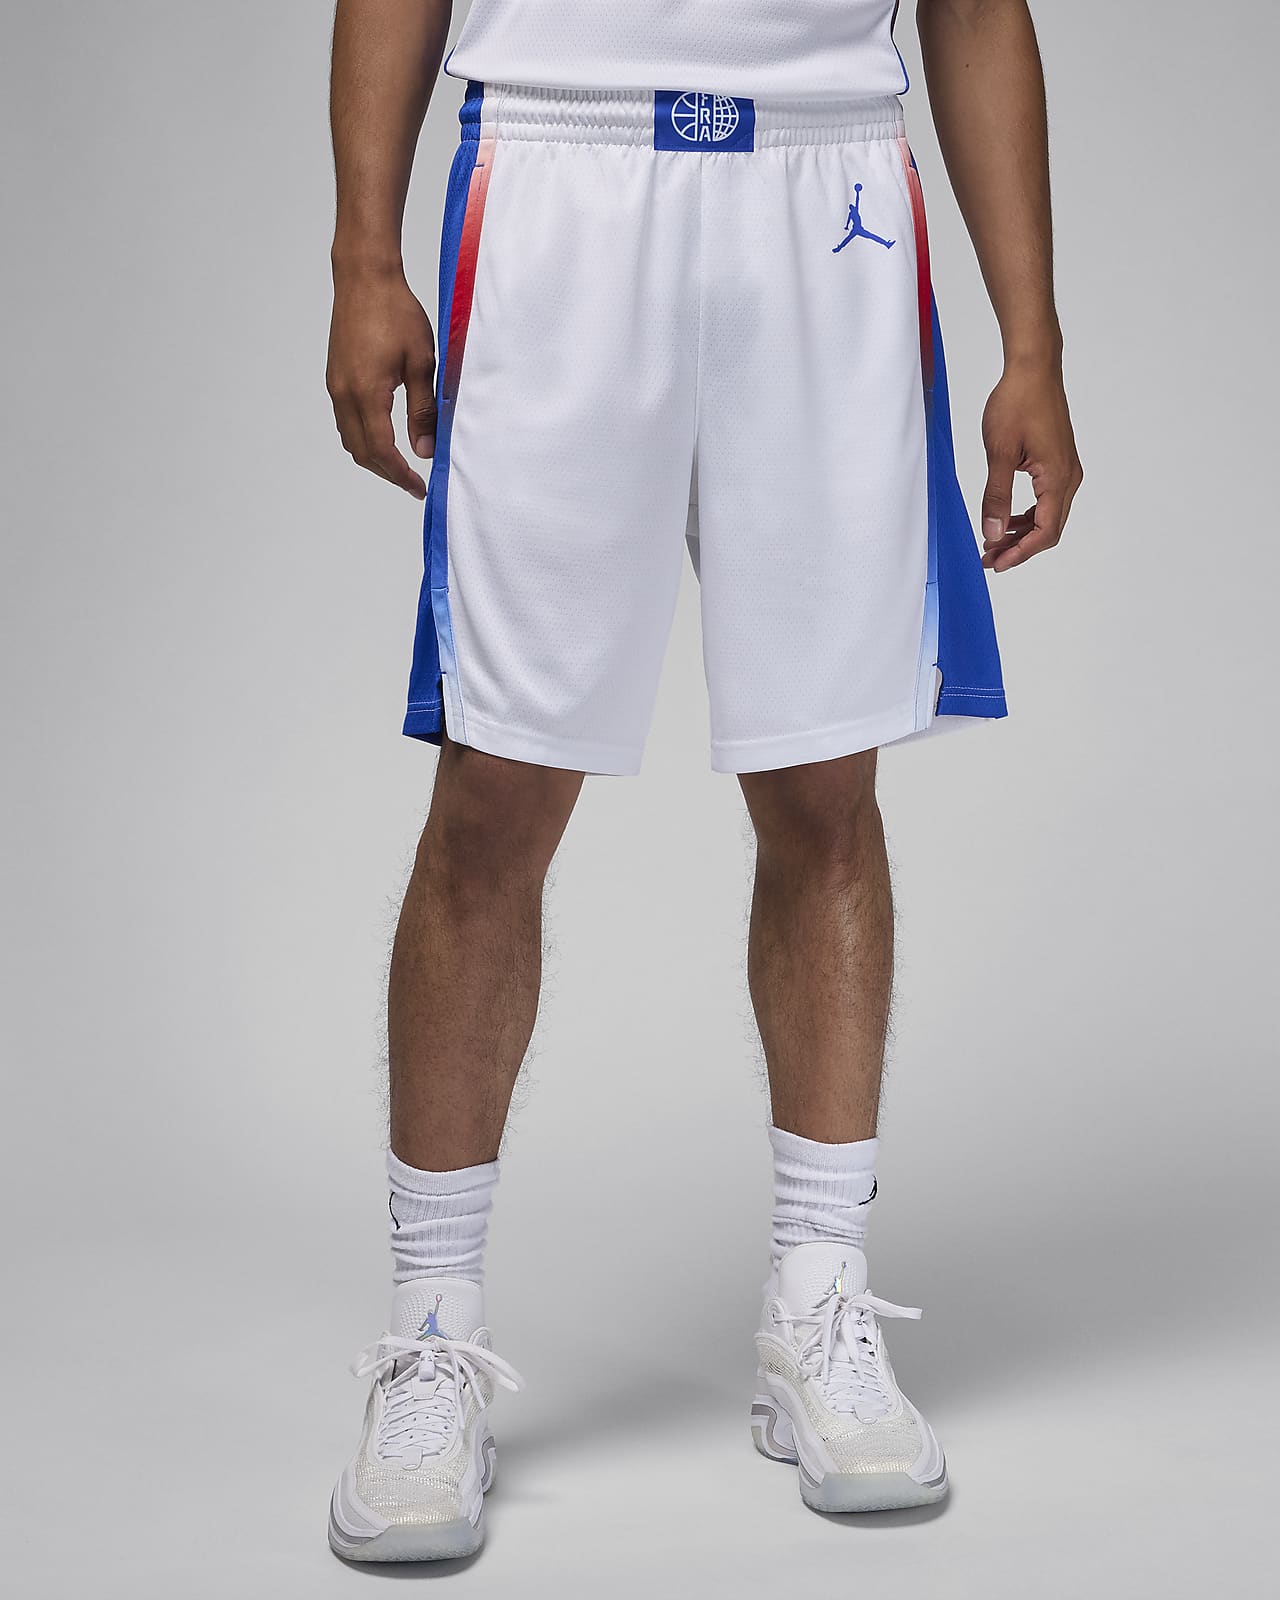 Primera equipación Limited Francia Pantalón corto de baloncesto Jordan - Hombre